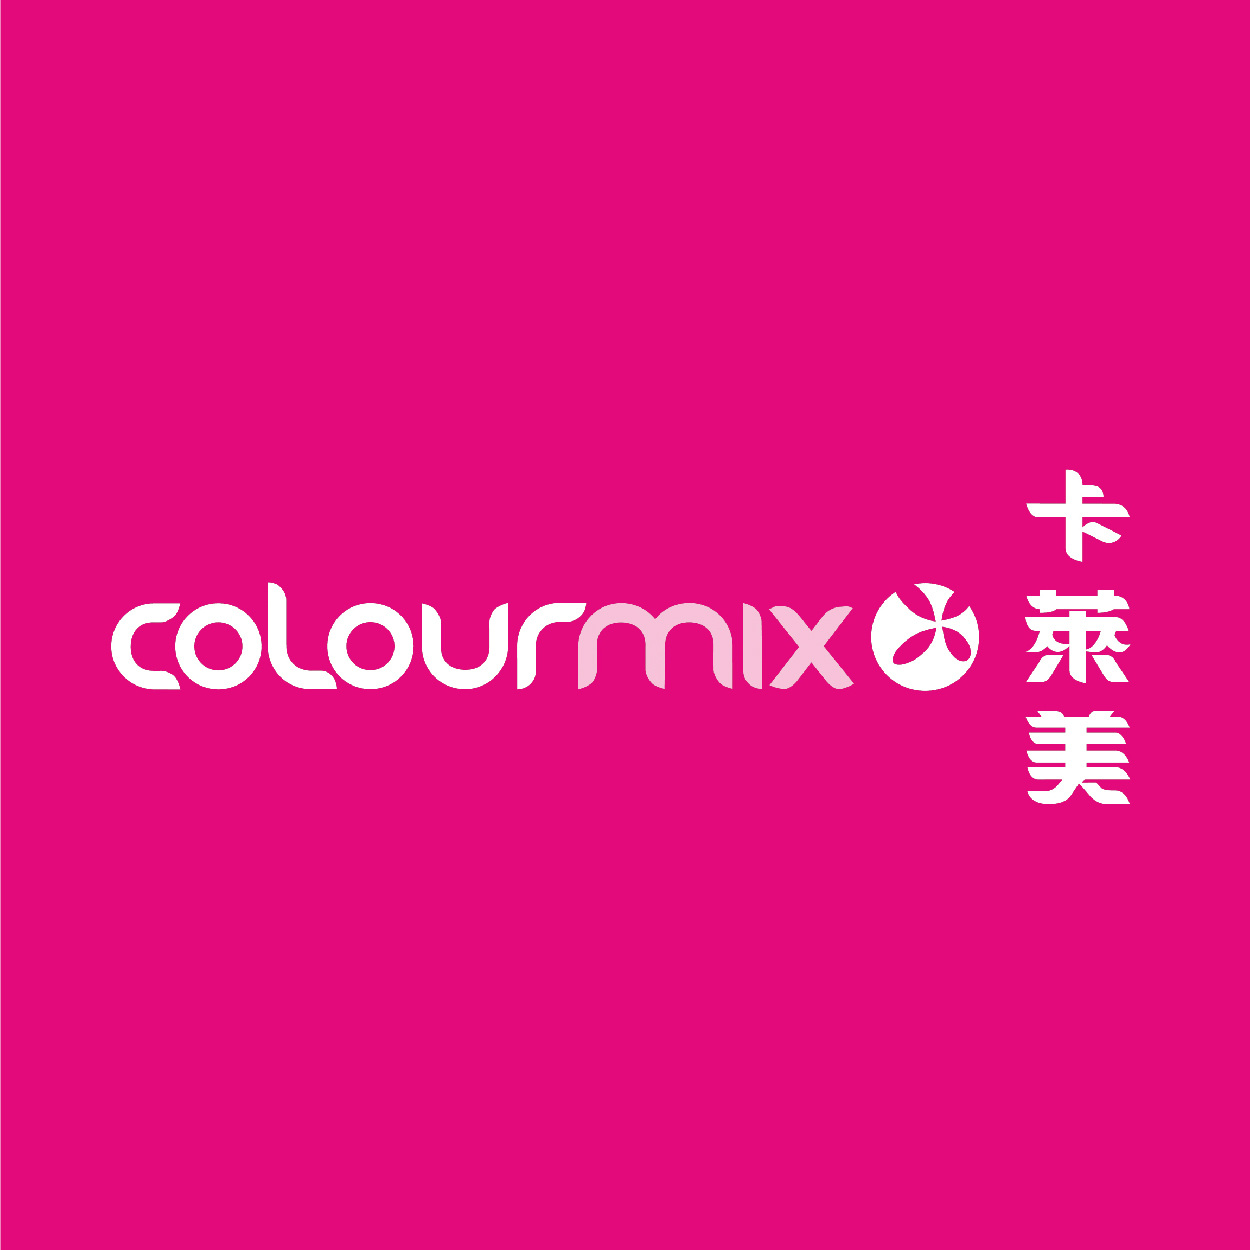 Colourmix 